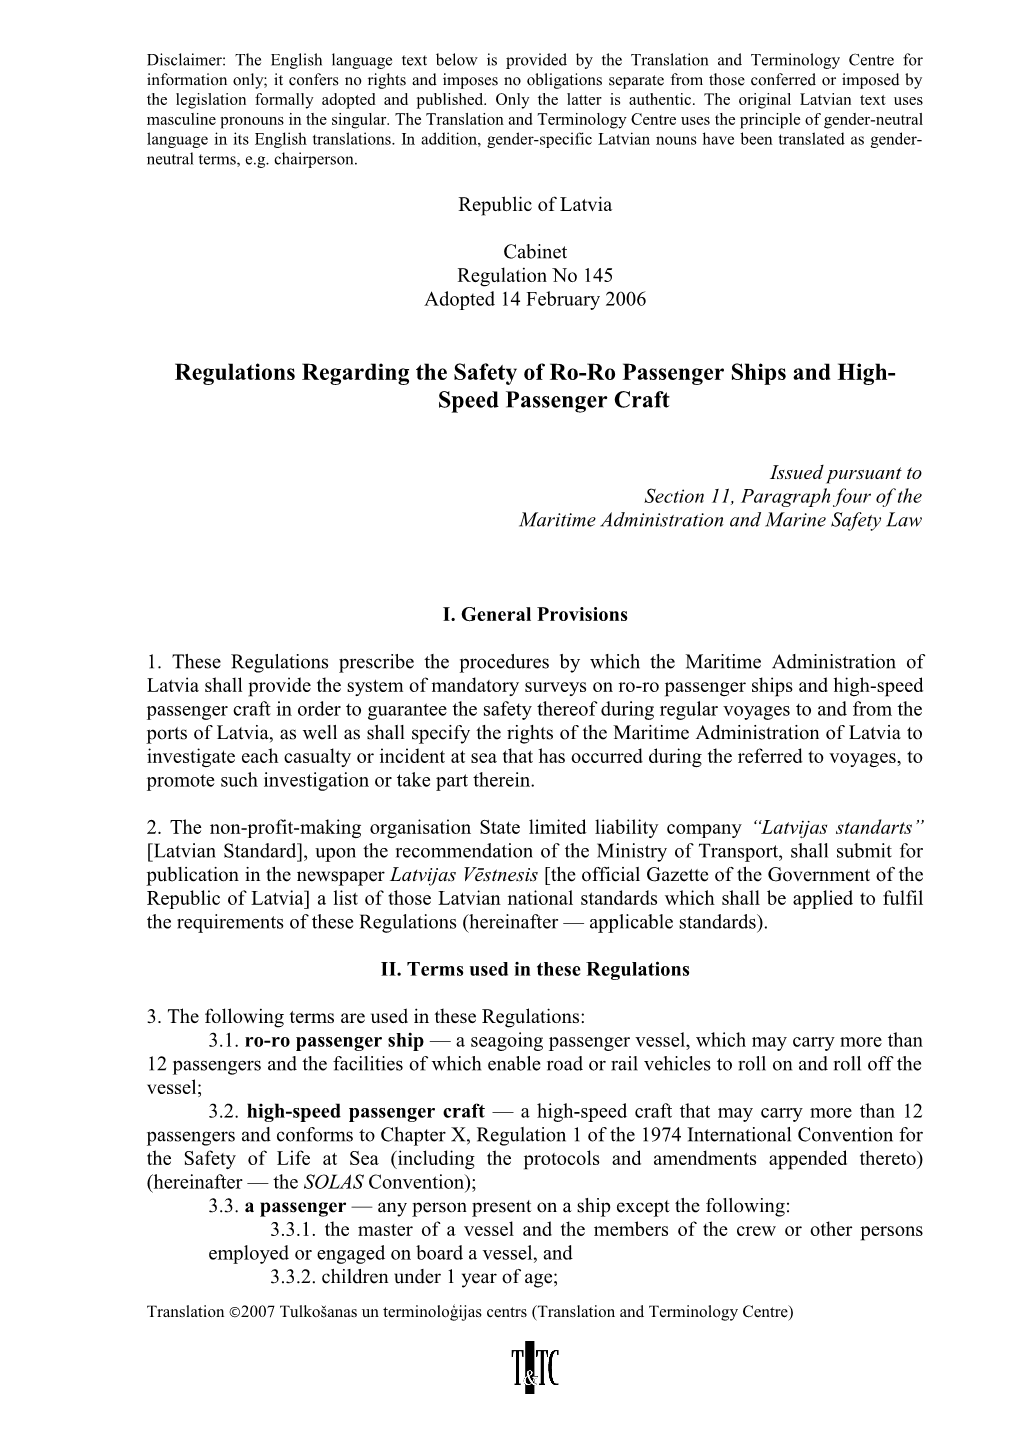 Regulations Regarding the Safety of Ro-Ro Passenger Ships and High-Speed Passenger Craft